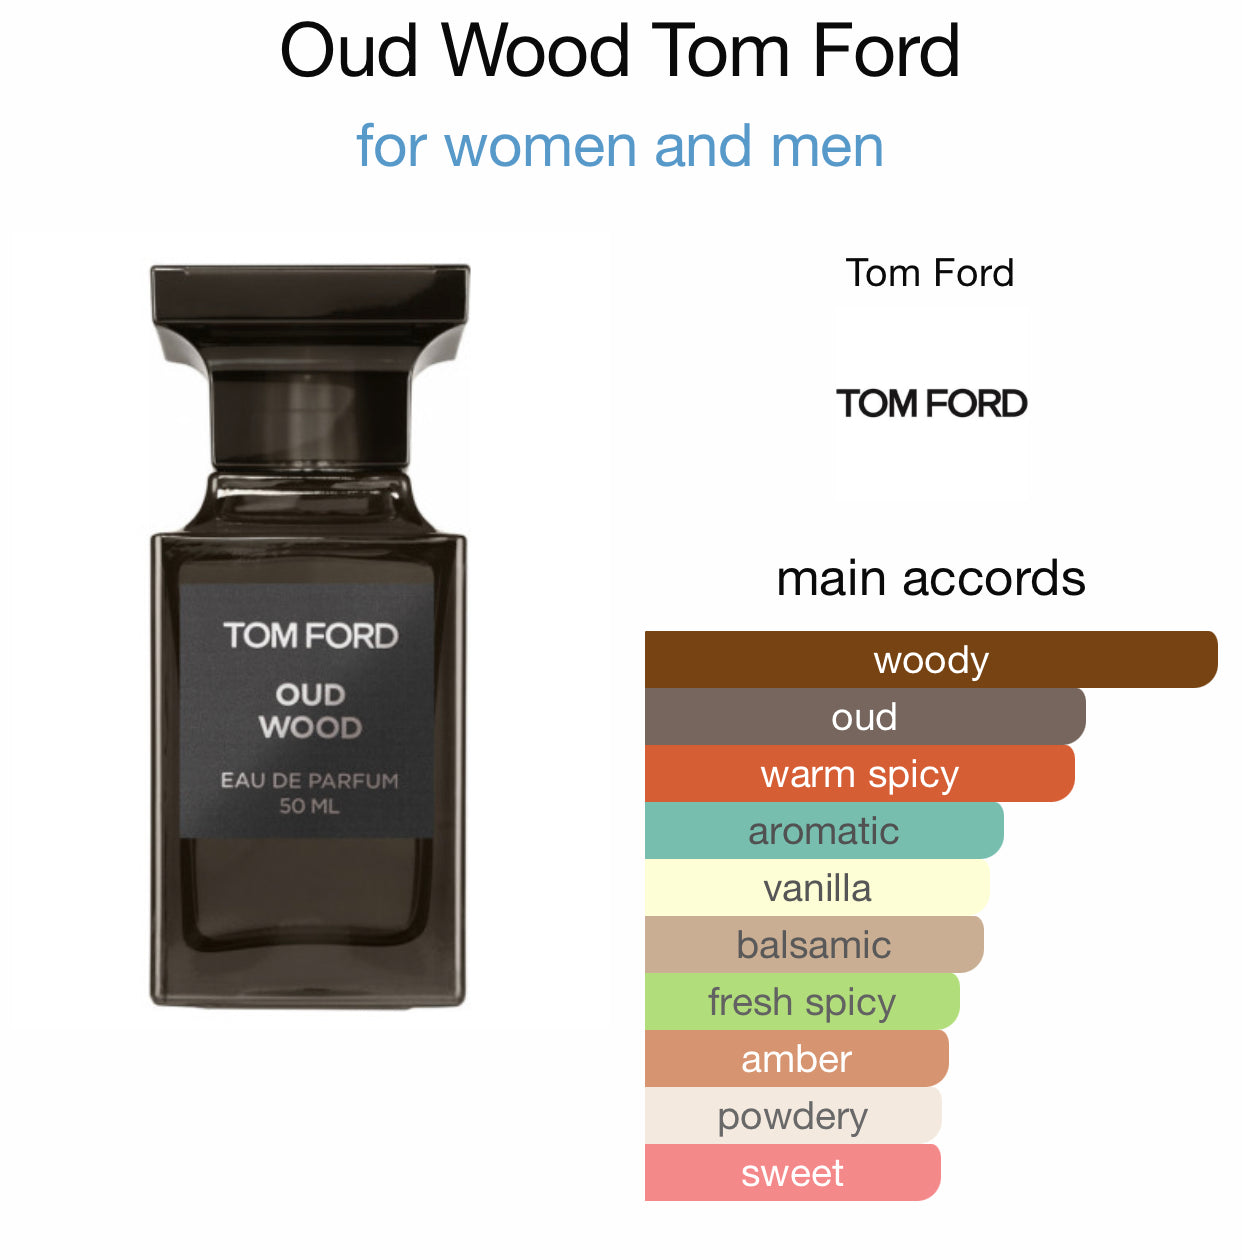 Inspired by Oud Wood Eau de Parfum